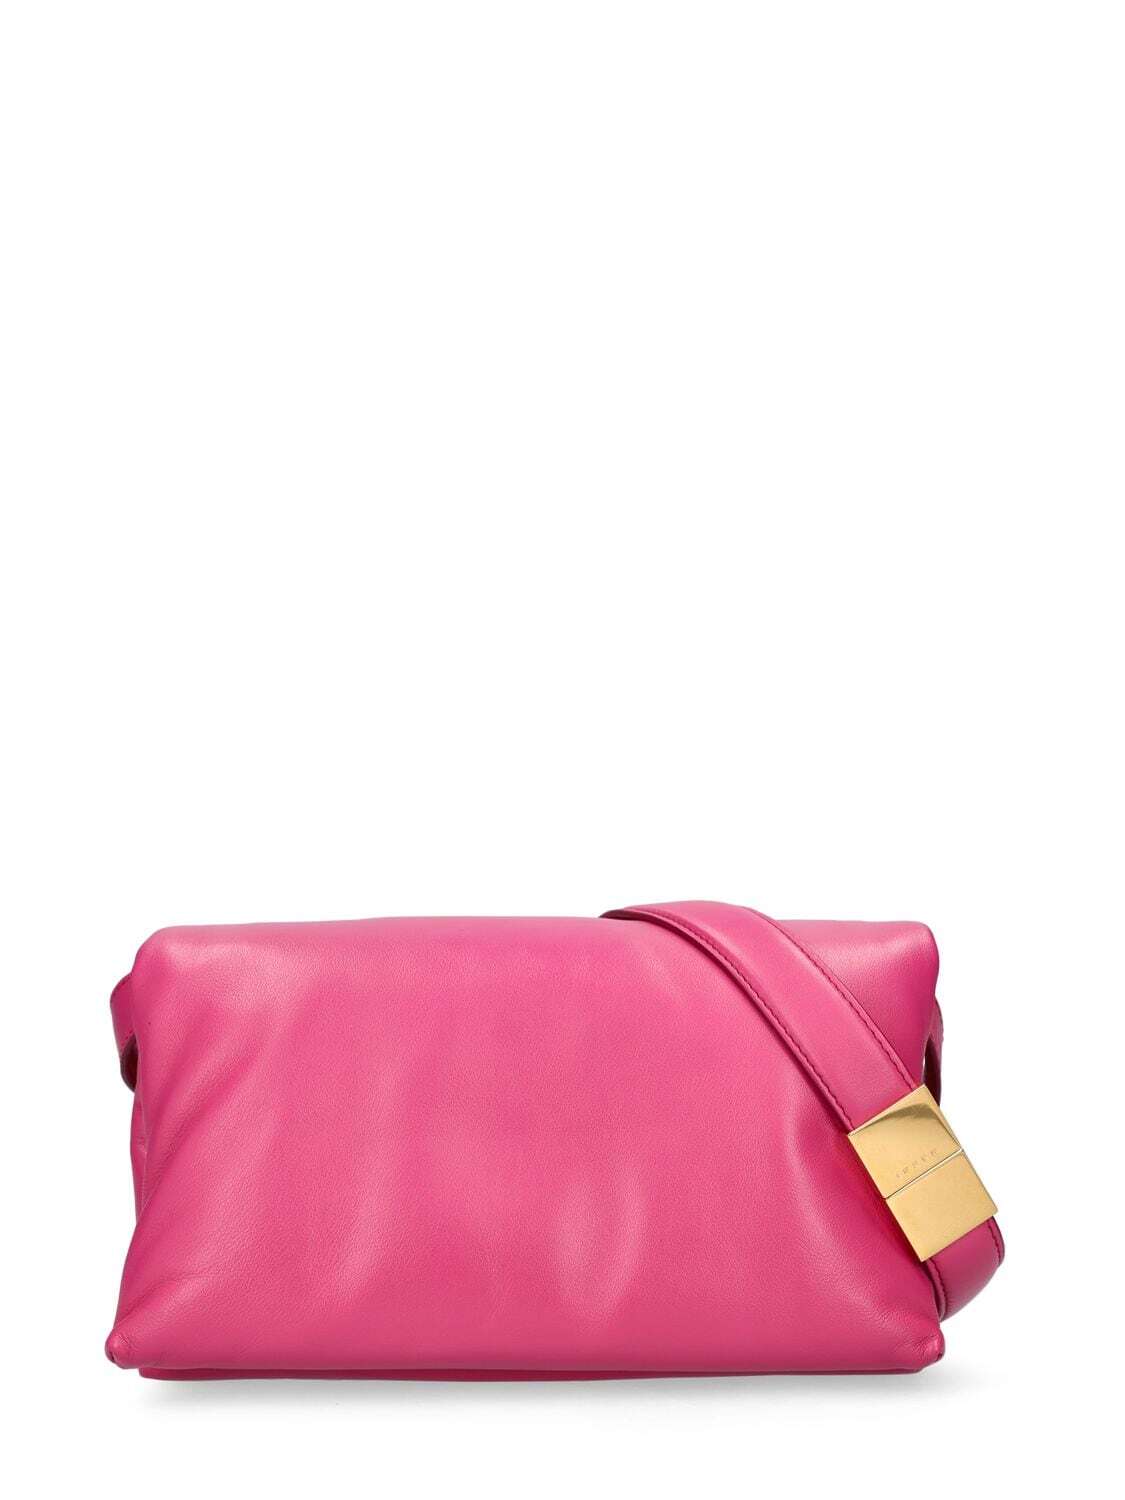 MARNI Small Prisma Leather Shoulder Bag